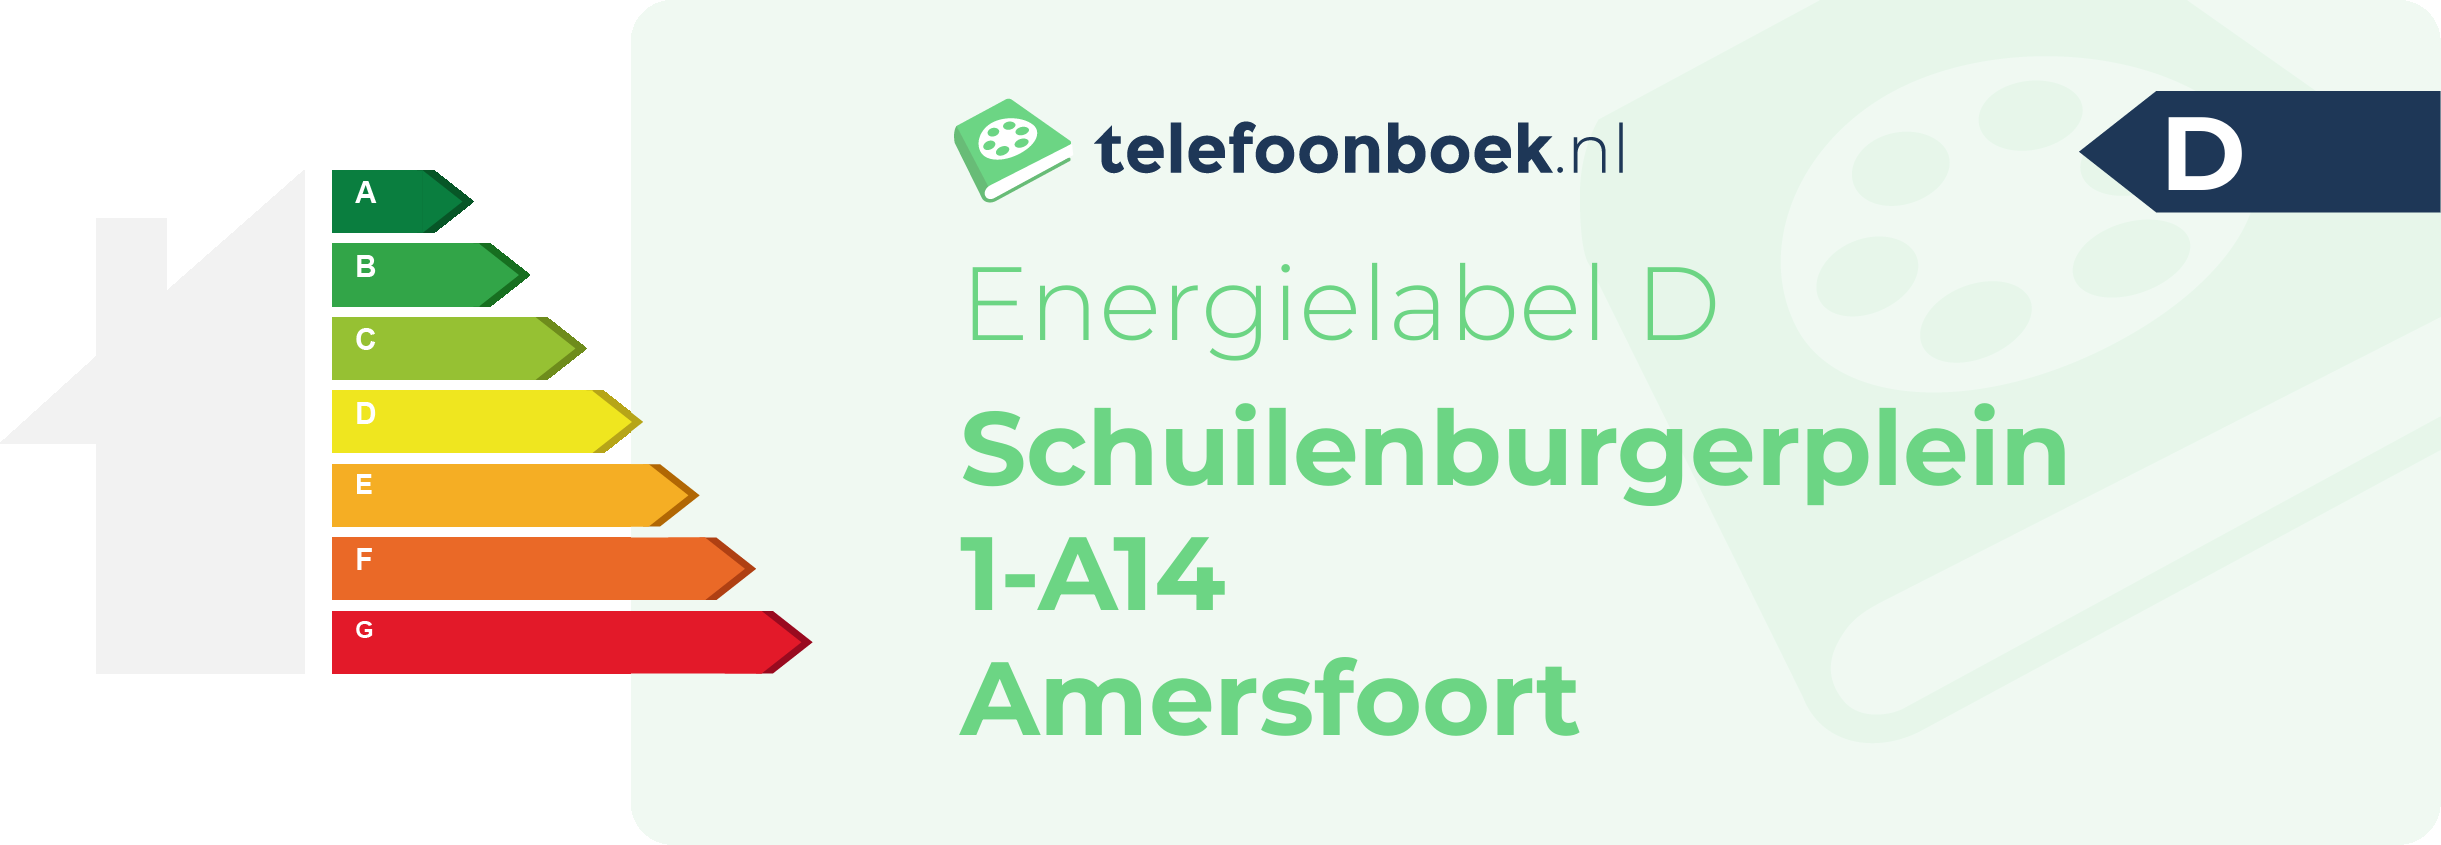 Energielabel Schuilenburgerplein 1-A14 Amersfoort